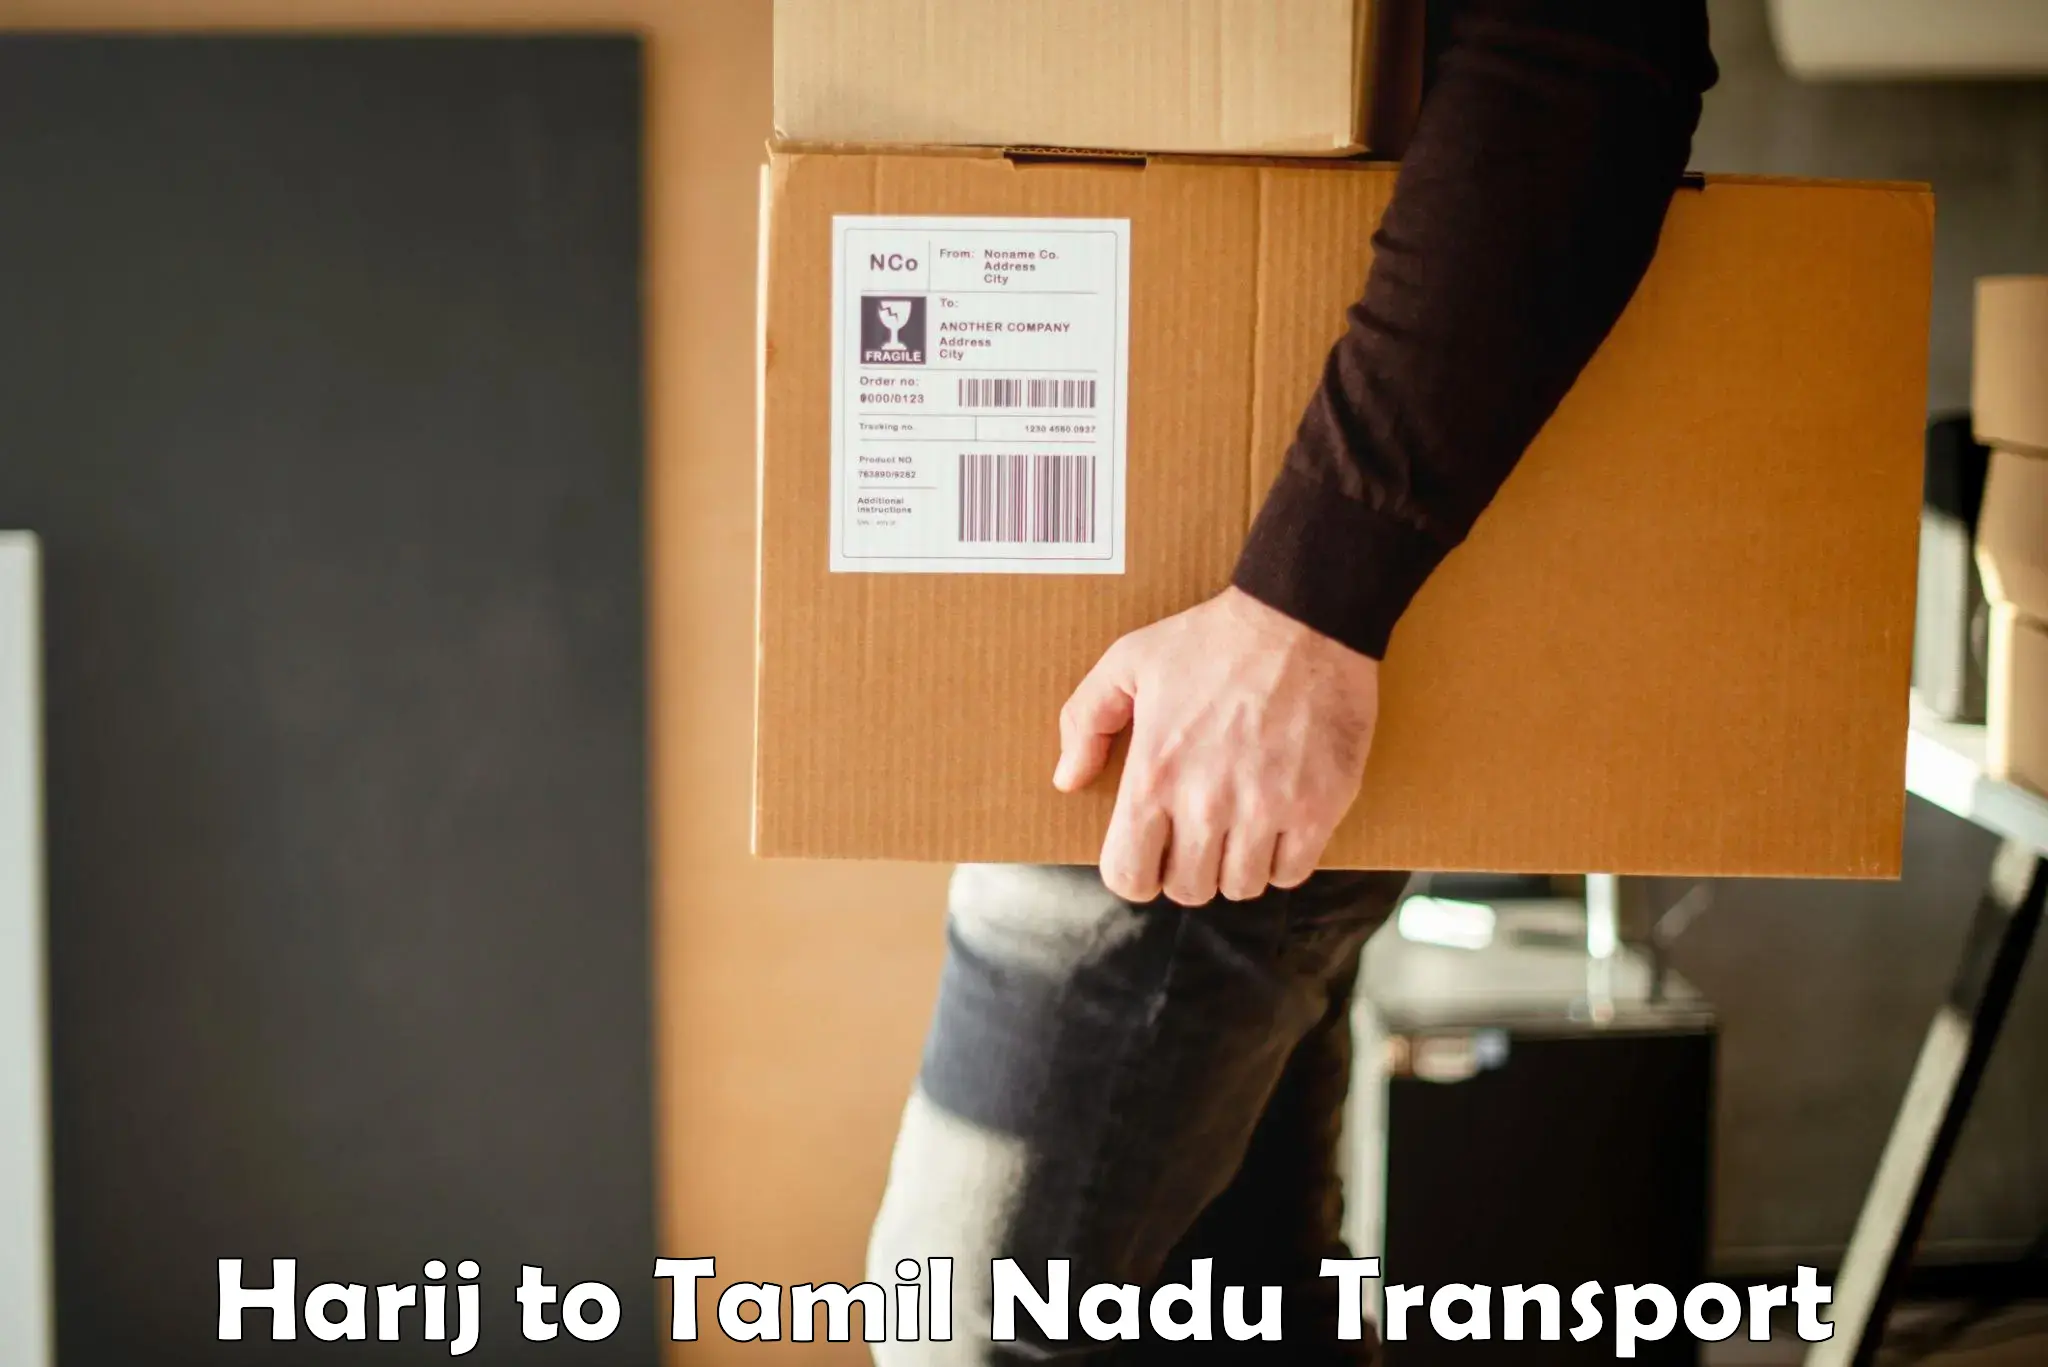 Nearest transport service Harij to Avadi